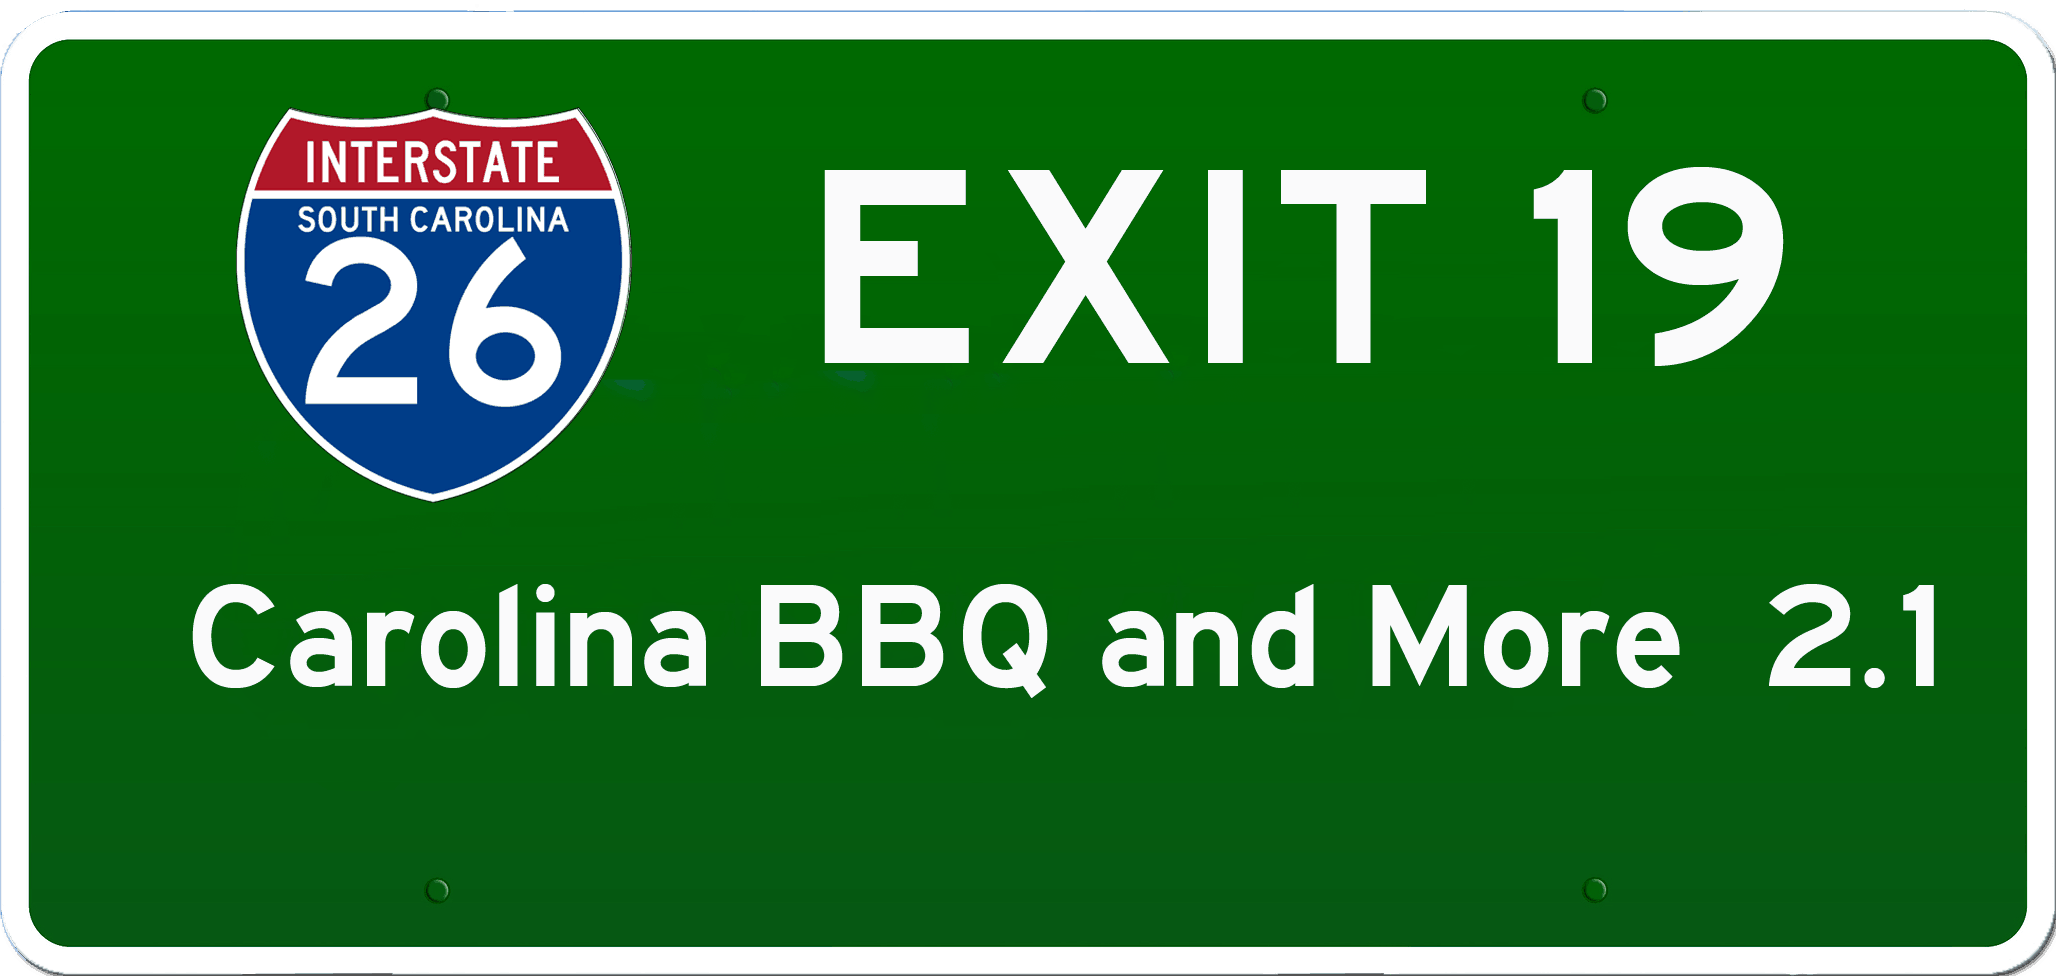 SC BBQ on I-26 at Exit 19